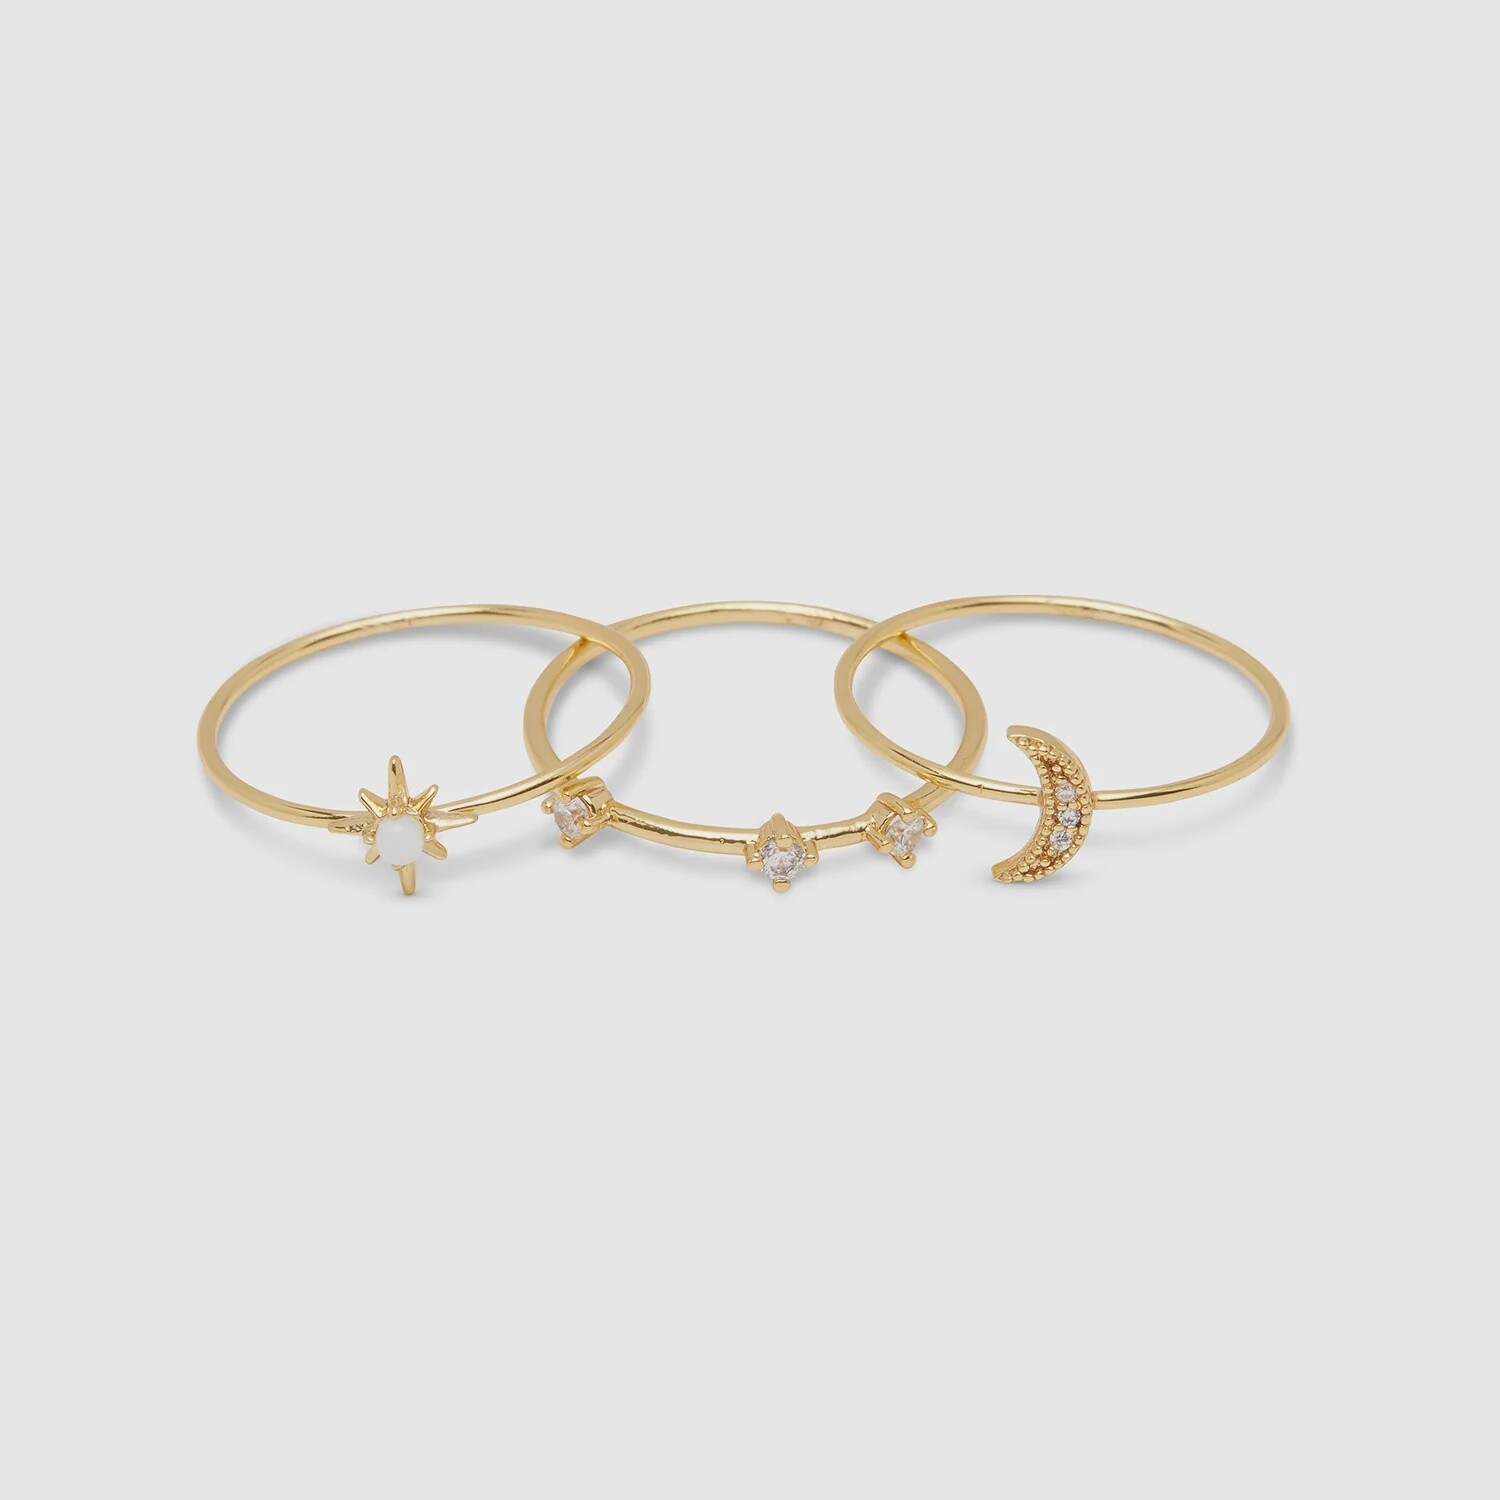 Luna Ring Set - Gold / white opalite / 6